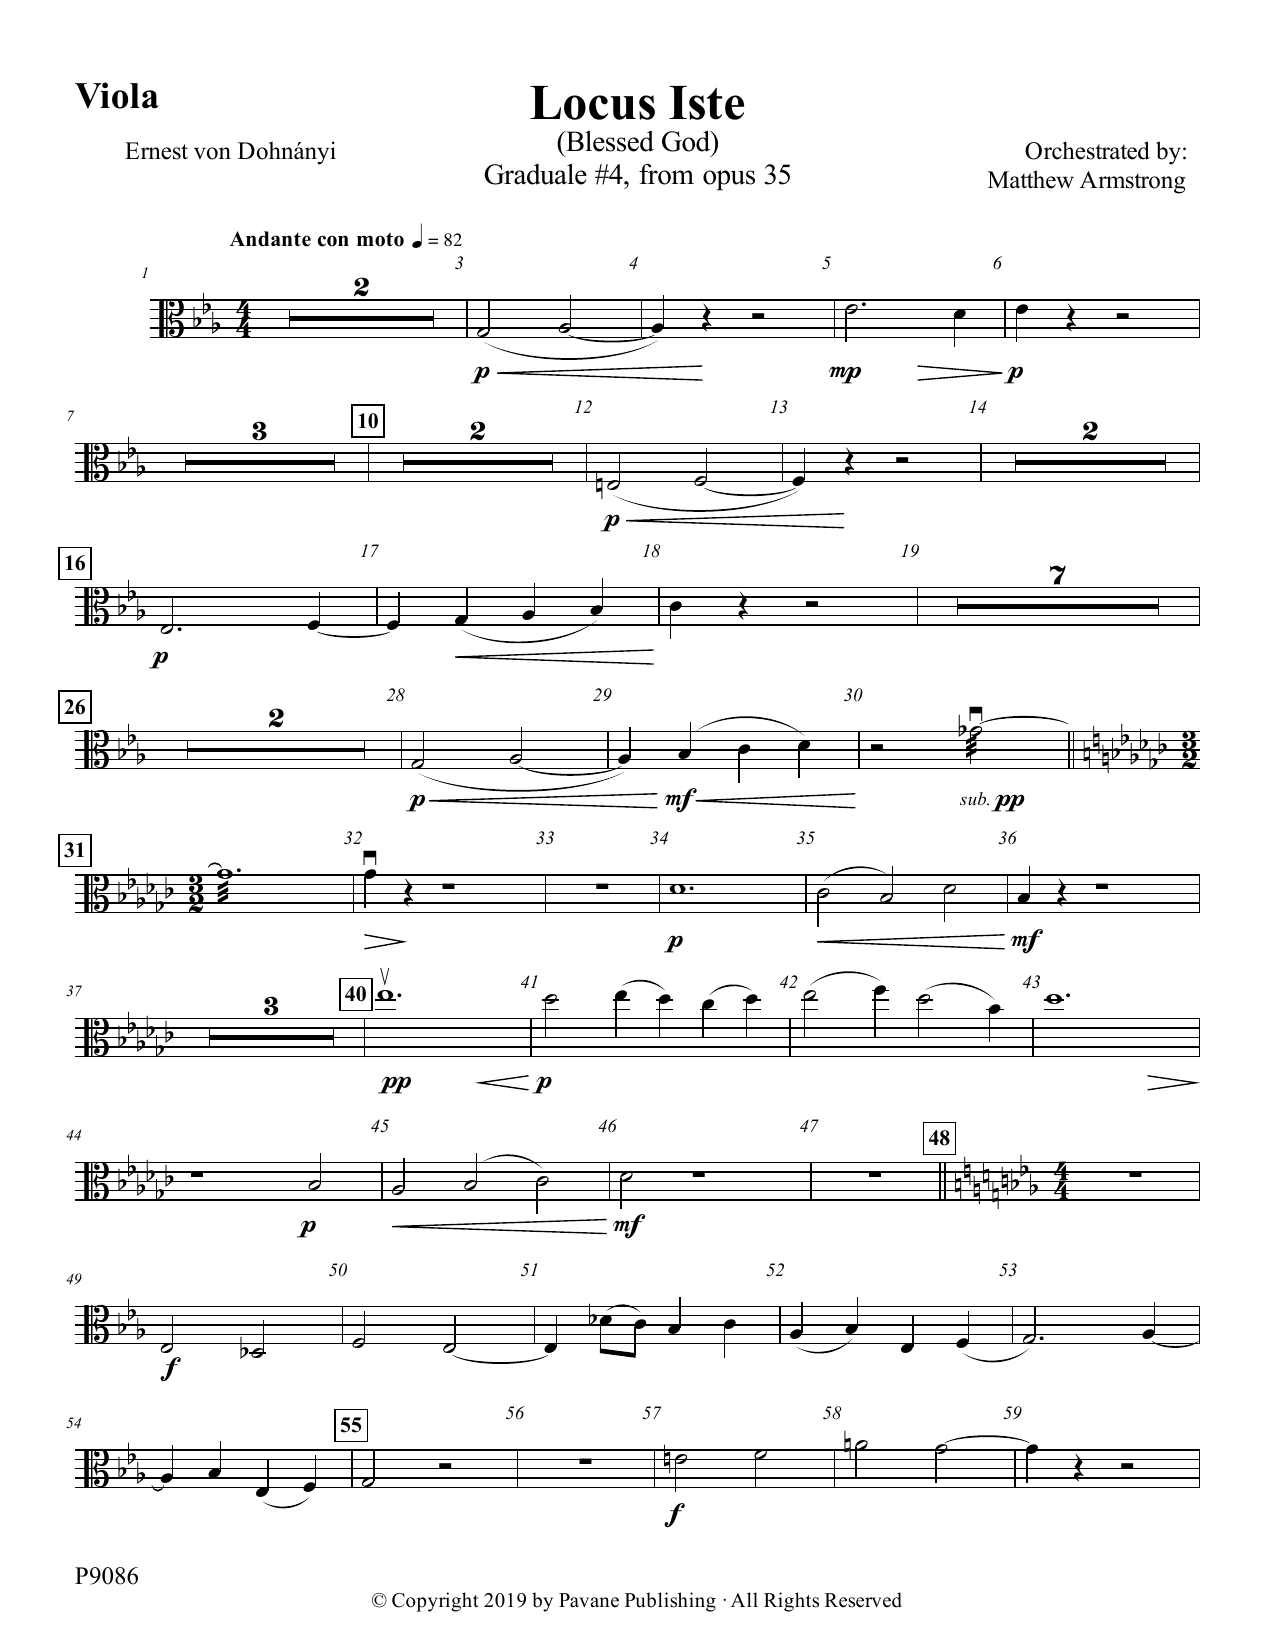 Matthew Armstrong Locus Iste - Viola Sheet Music Notes & Chords for Choir Instrumental Pak - Download or Print PDF